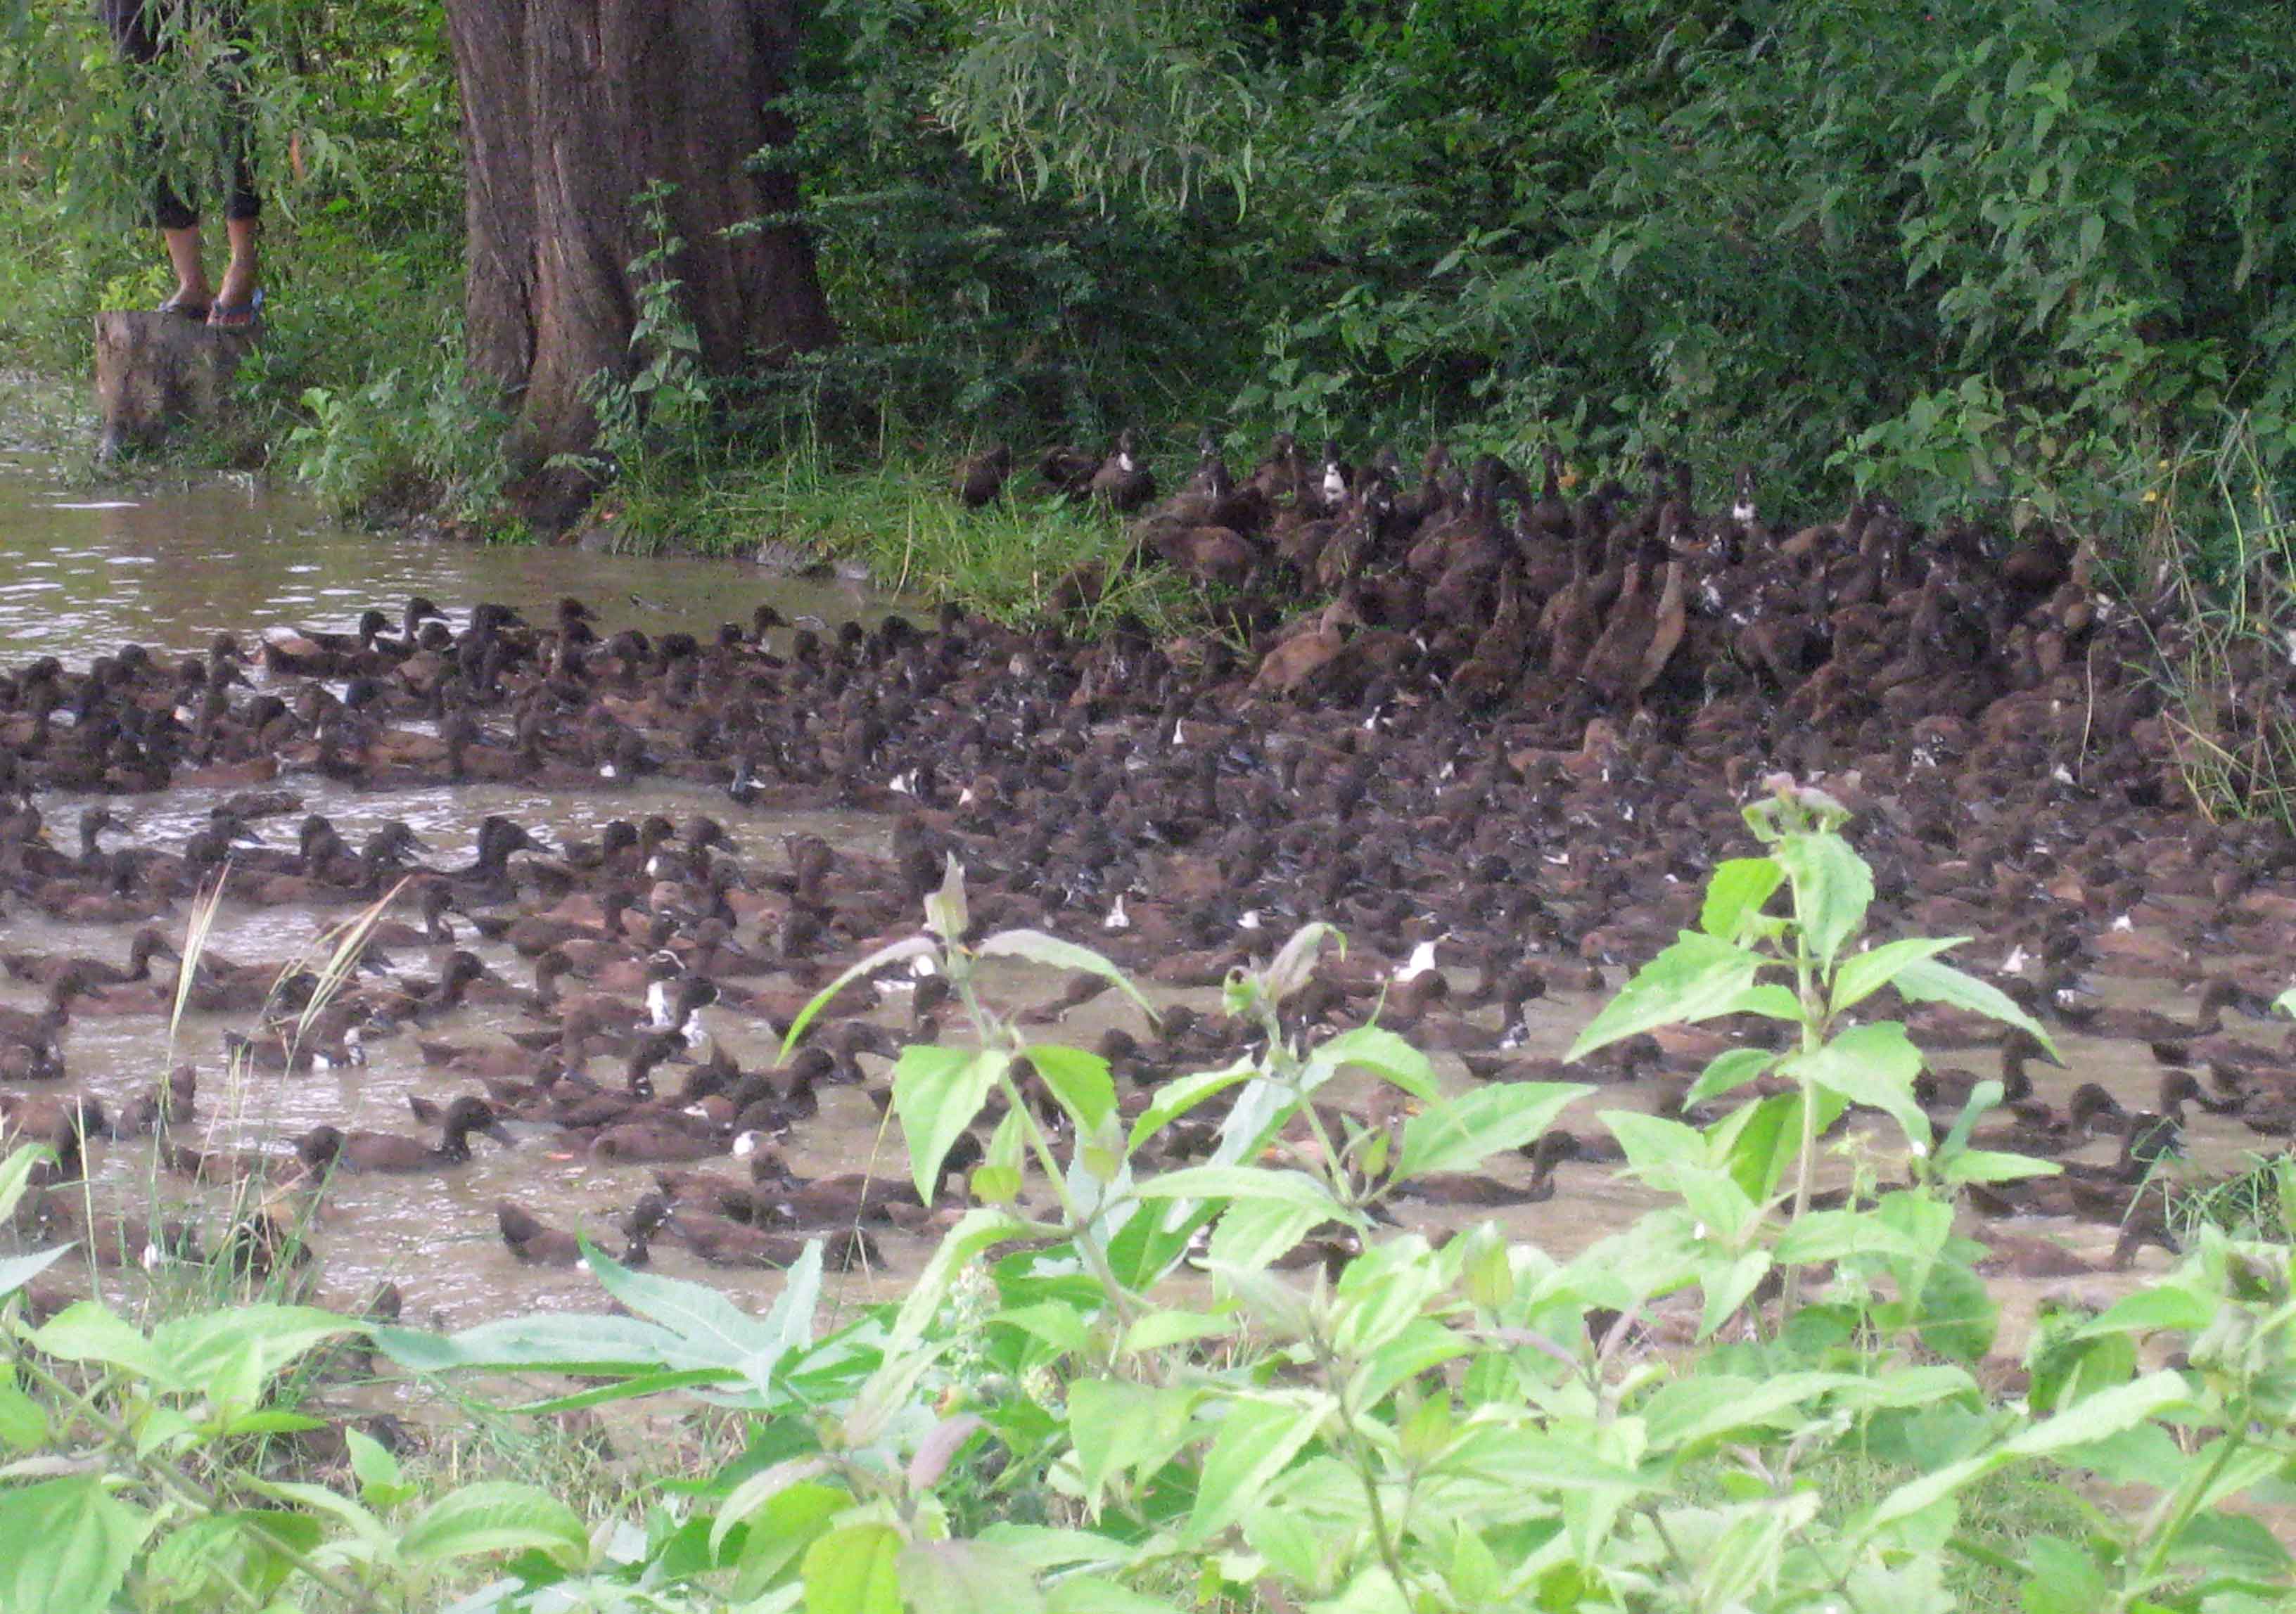 Herd of Ducks - rural countryside - Province of Battambang